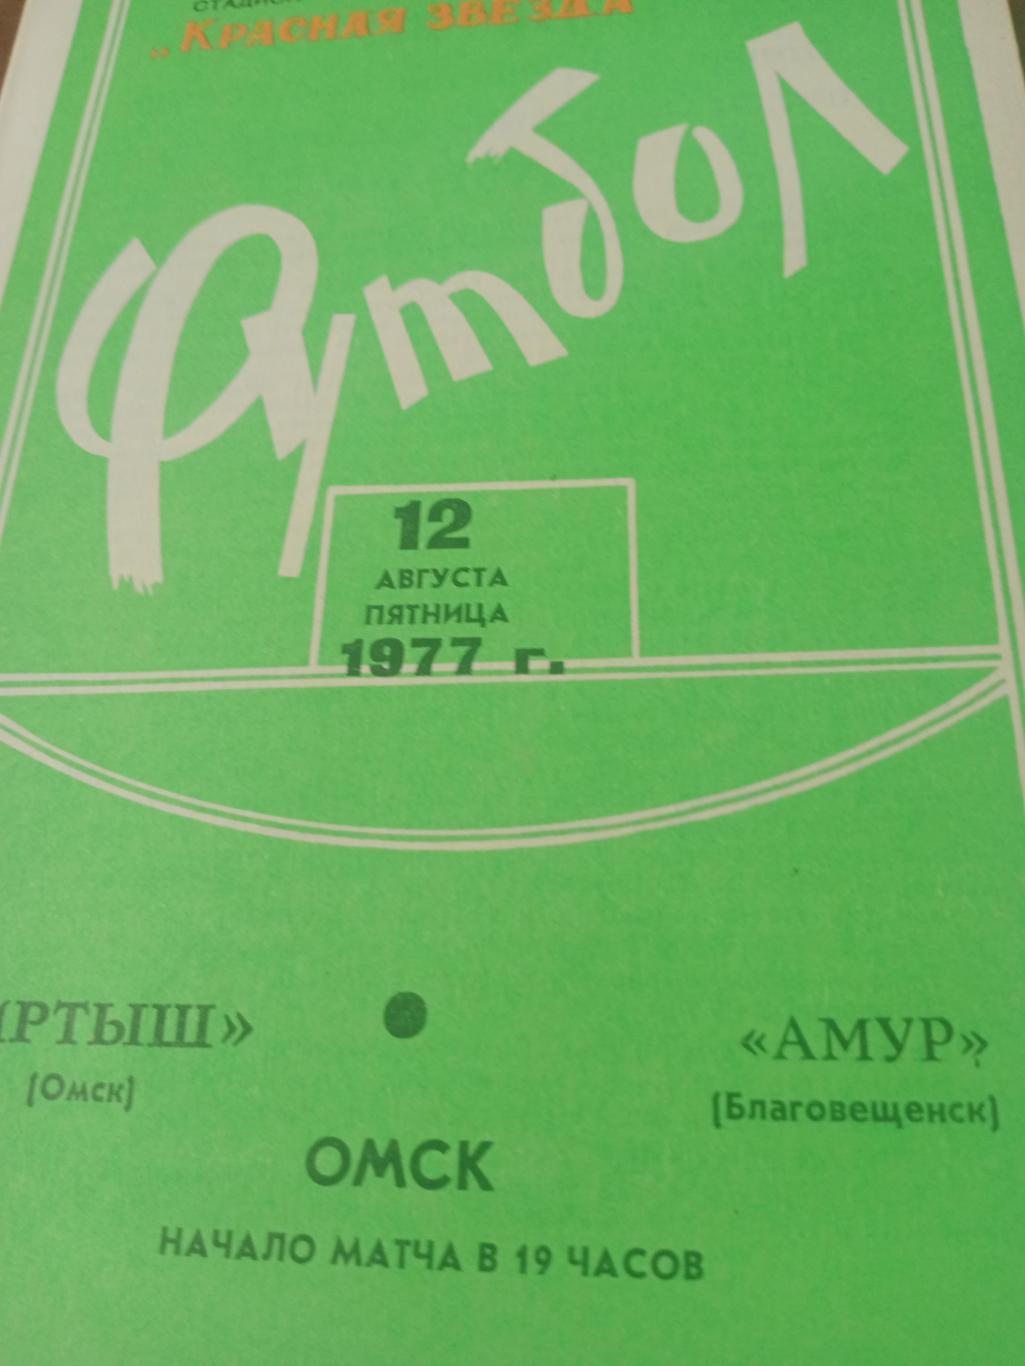 Иртыш Омск - Амур Благовещенск. 12 августа 1977 год